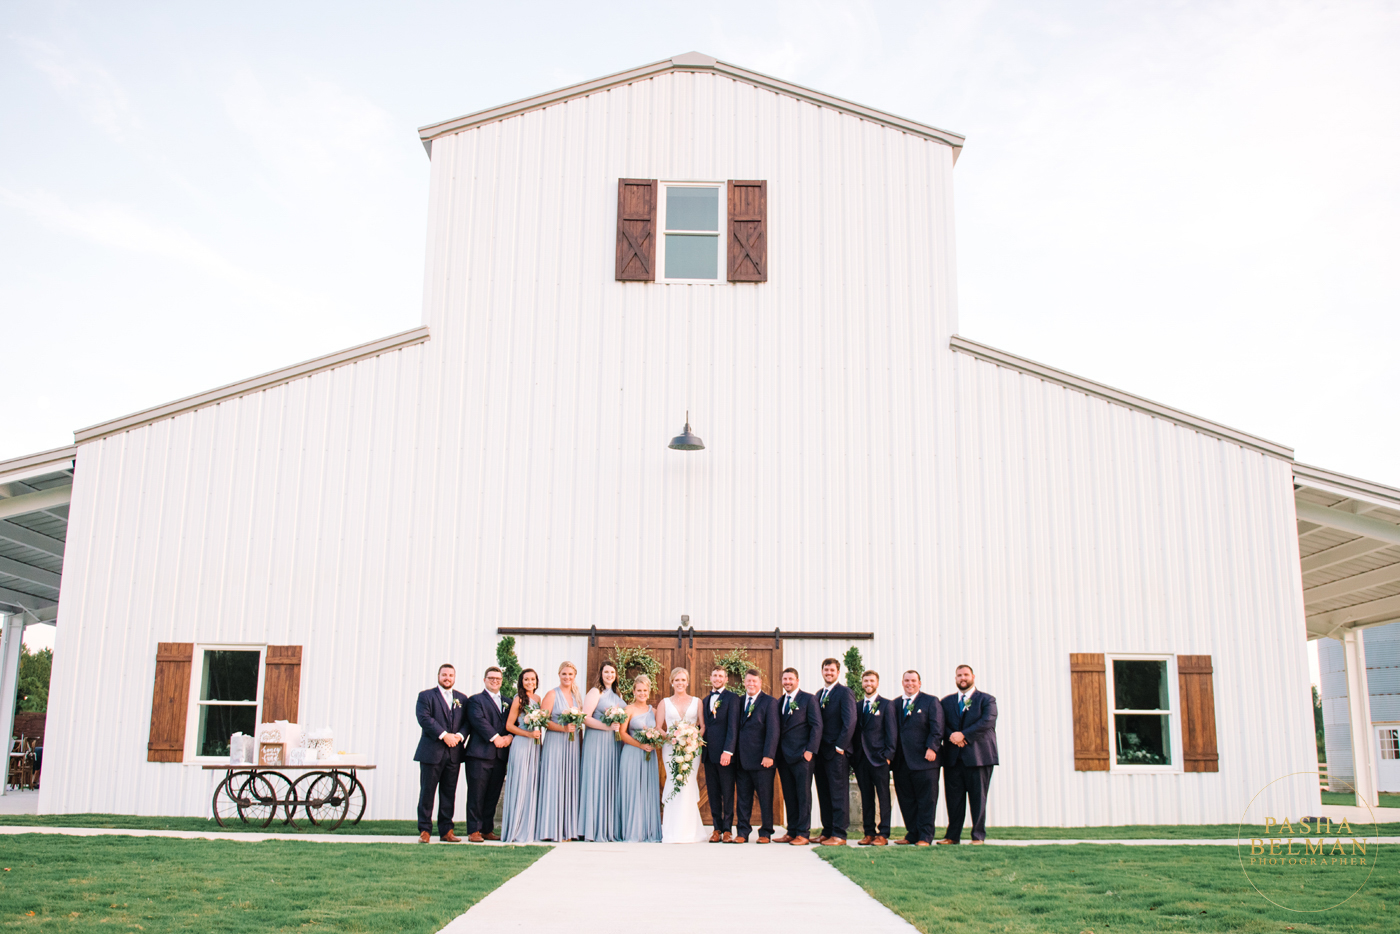 Belle's Venue and Farms Wedding Photos near Charlotte NC